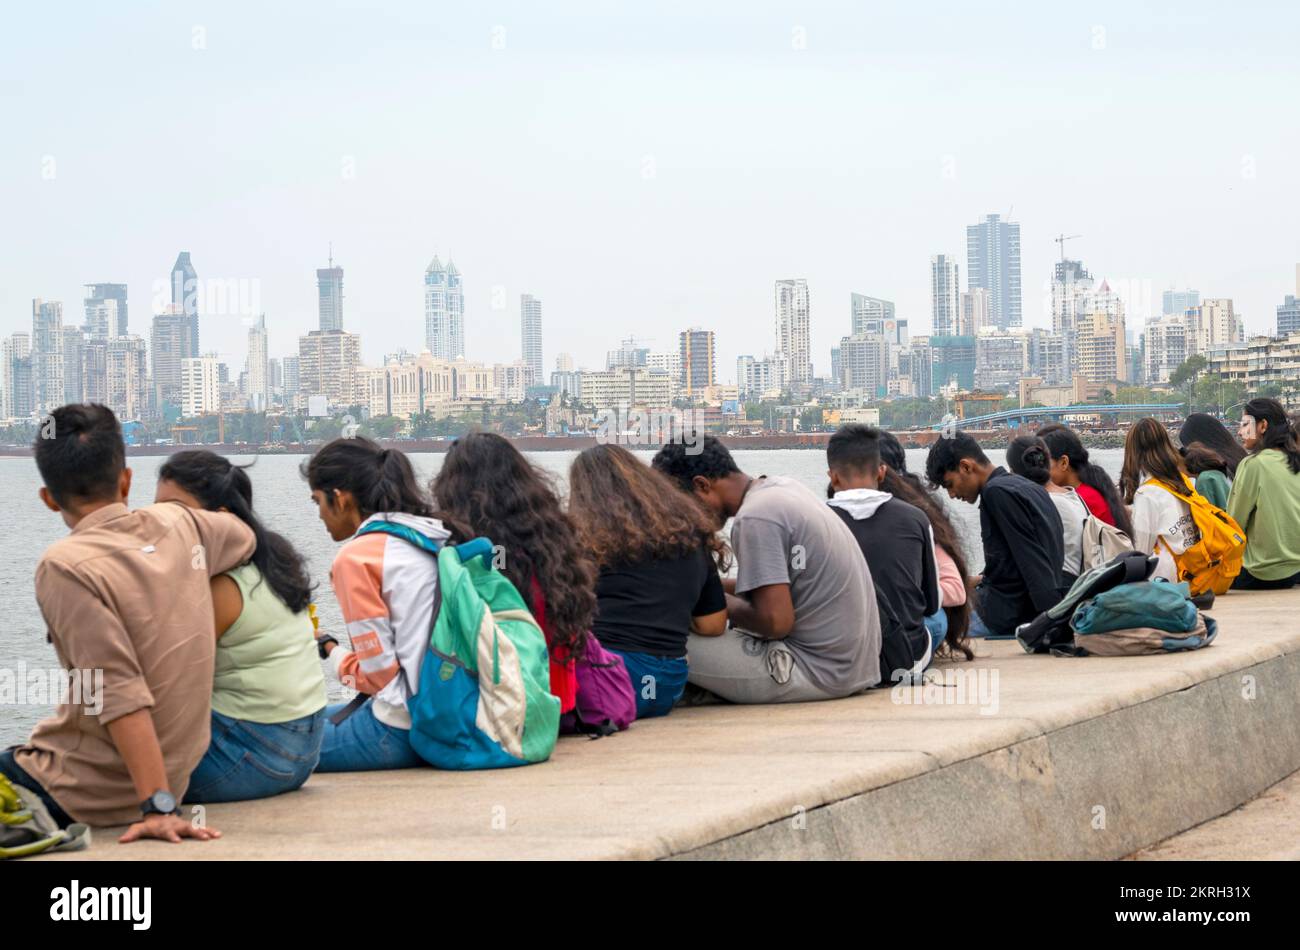 MUMBAI - 25. SEPTEMBER: Am 25. September sitzen Menschen am Marine Drive oder an der Queens Necklace Promenade in Mumbai. 2022 in Indien Stockfoto